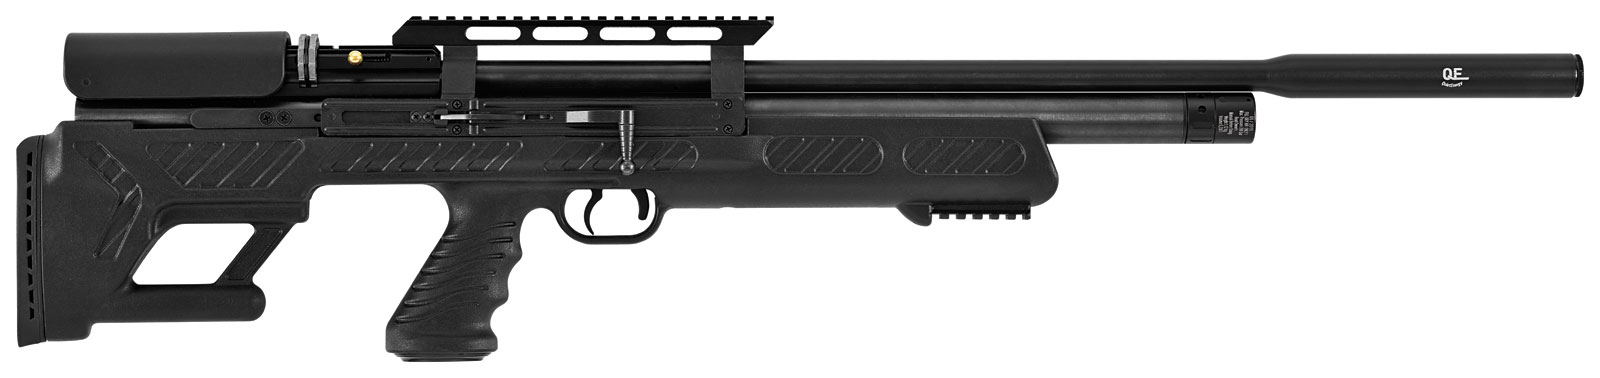 Black Hatsan Bullboss .25 Caliber Airgun HGBullBoss-25 